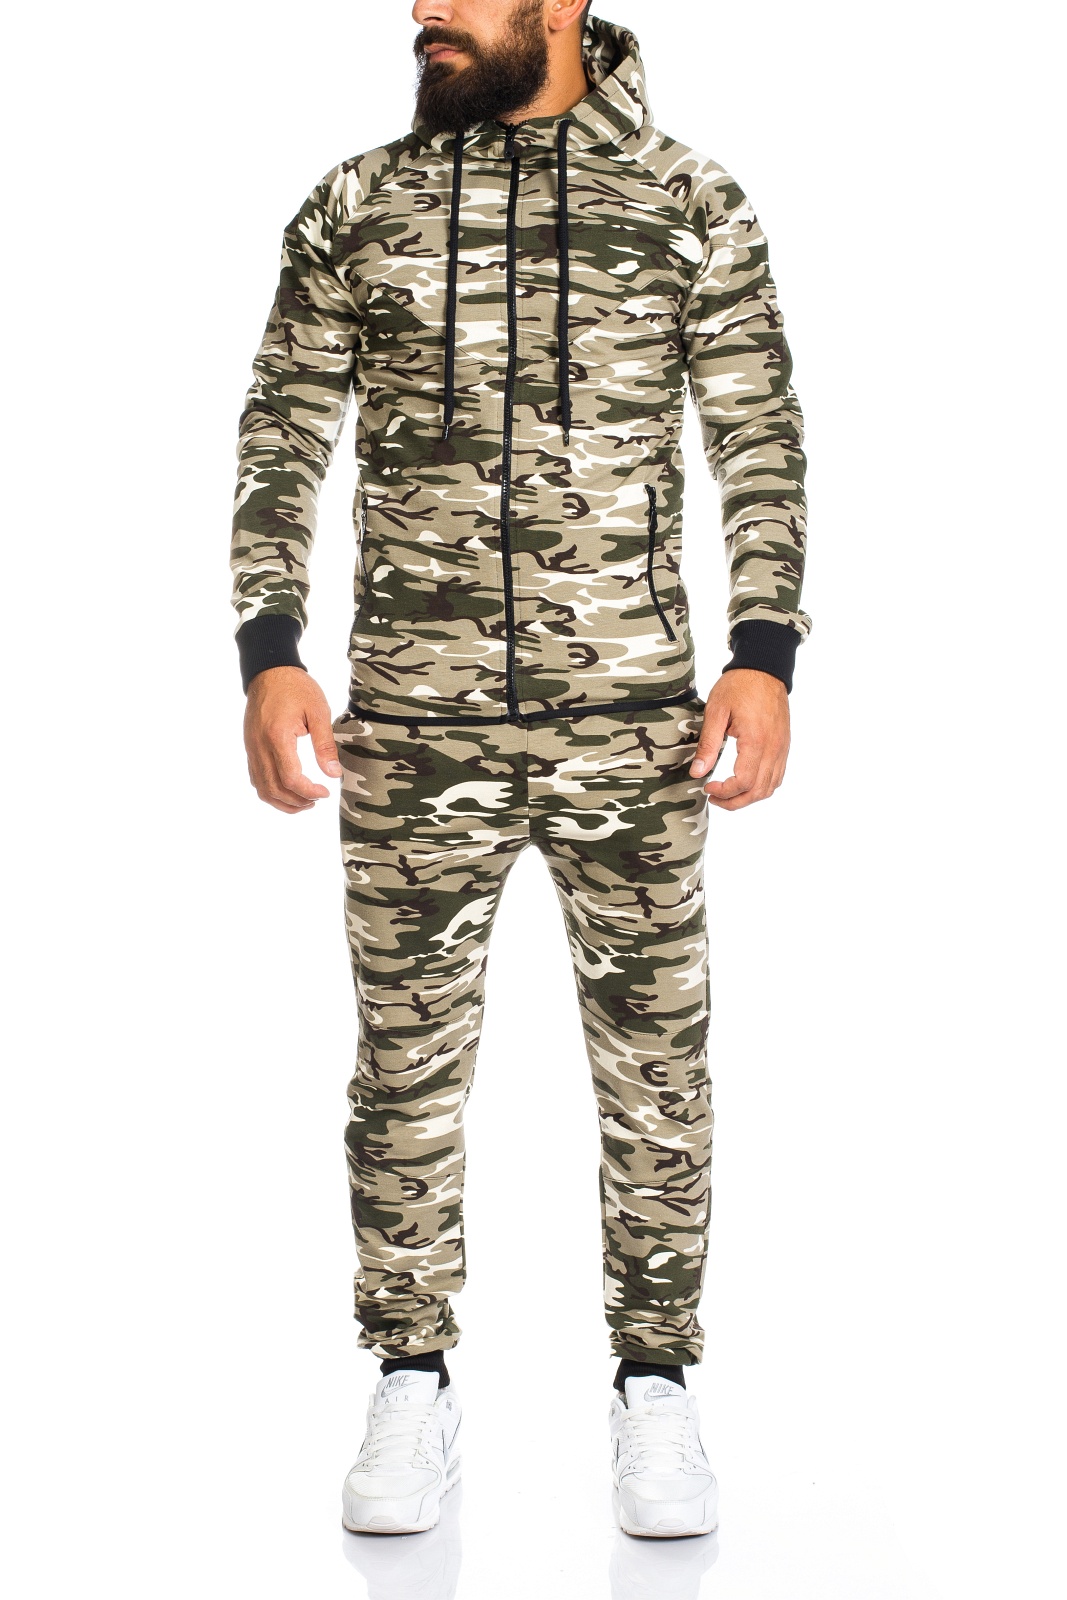 Men's camouflage army jogging suit jogging pants jacket trackies ...